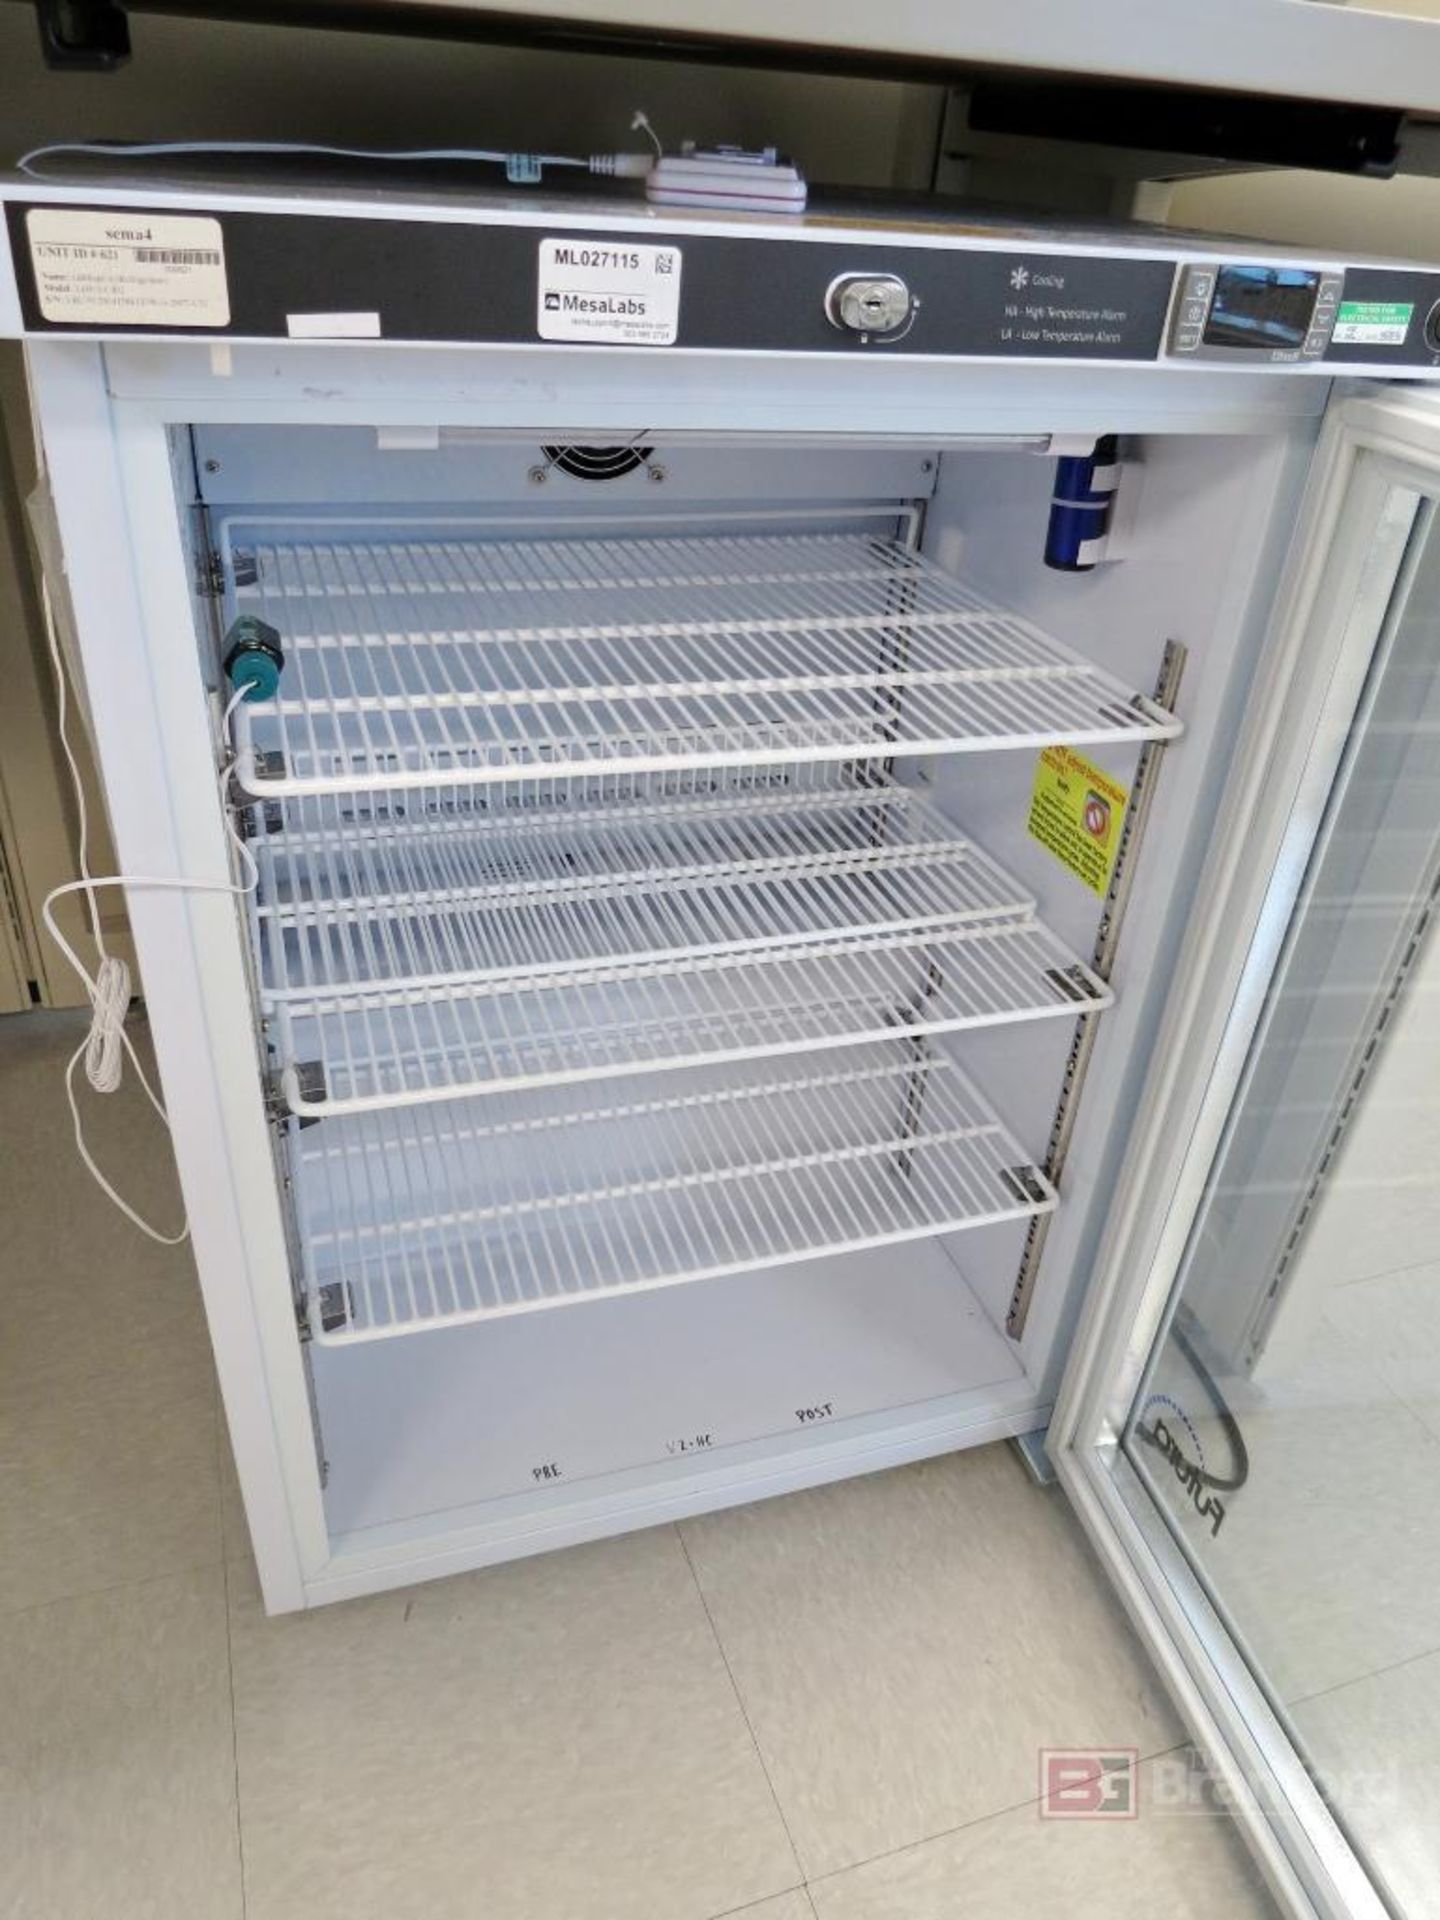 LabRepCo LHP-5-URG Futura +4°C Glass Door Refrigerator - Image 3 of 4